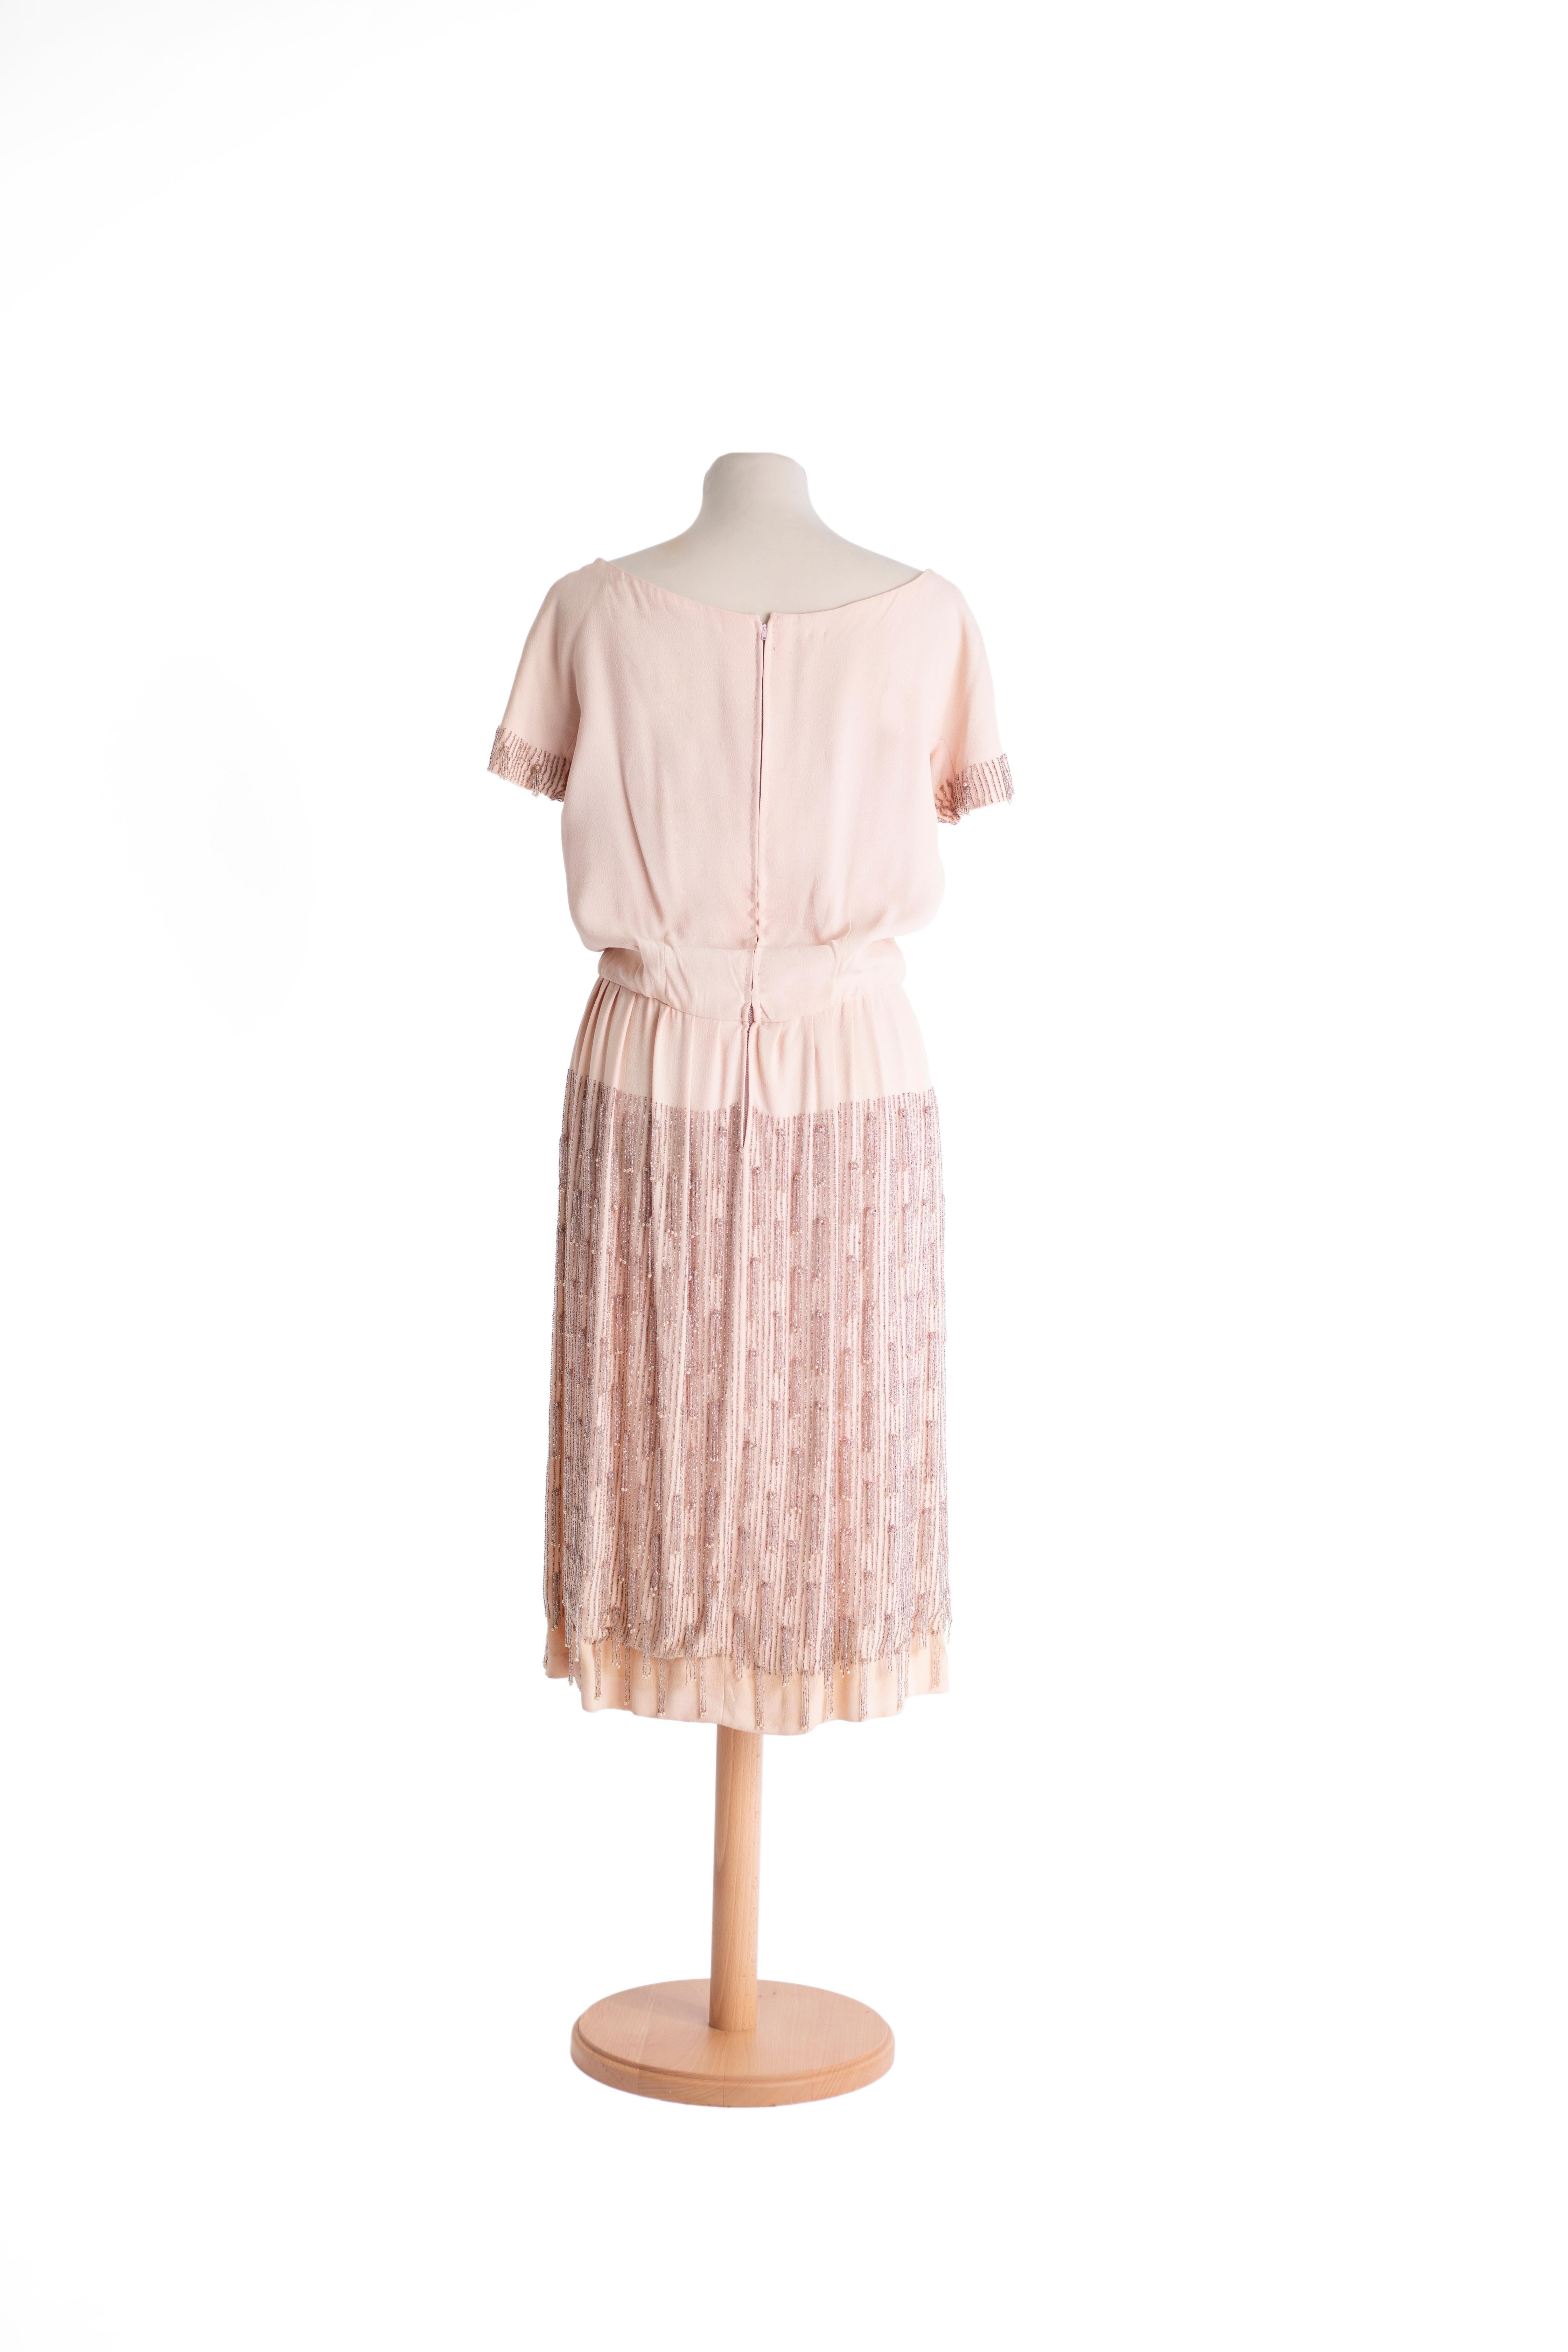 Women's 1960s Bernard Sagardoy light pink vintage dress with beaded skirt For Sale